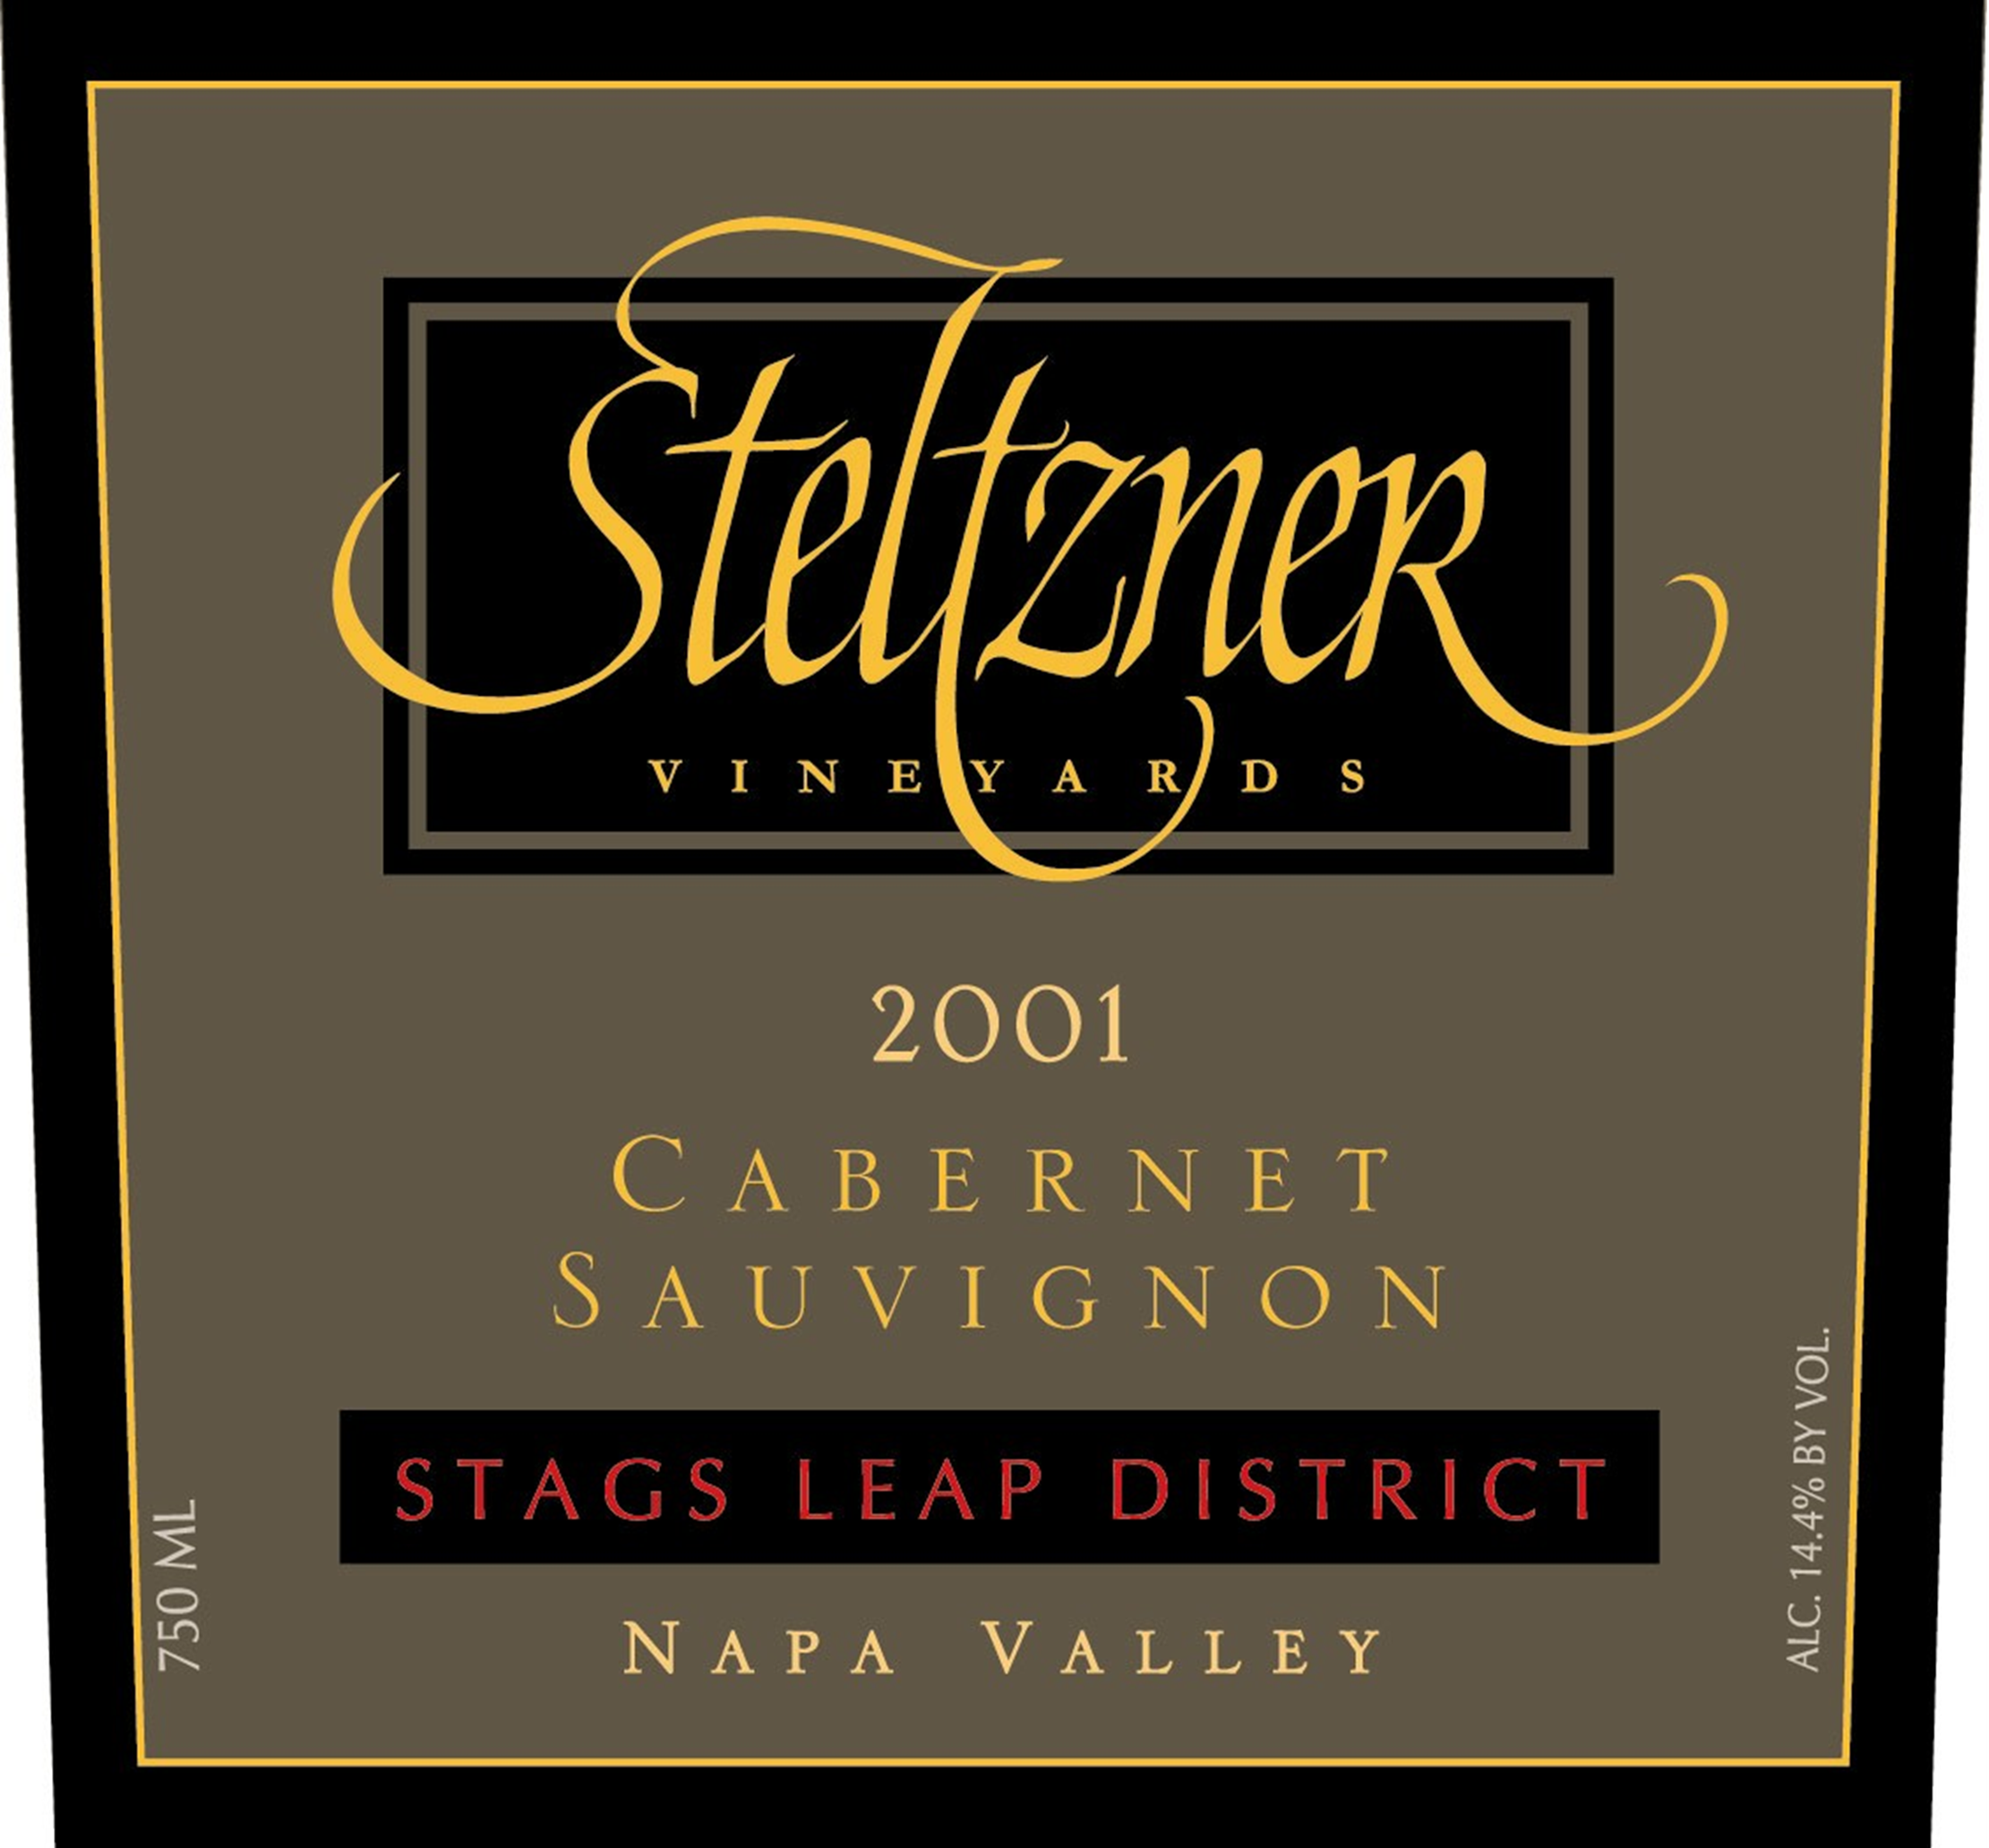 Product Image for 2001 Steltzner Vineyards Cabernet Sauvignon, SLD